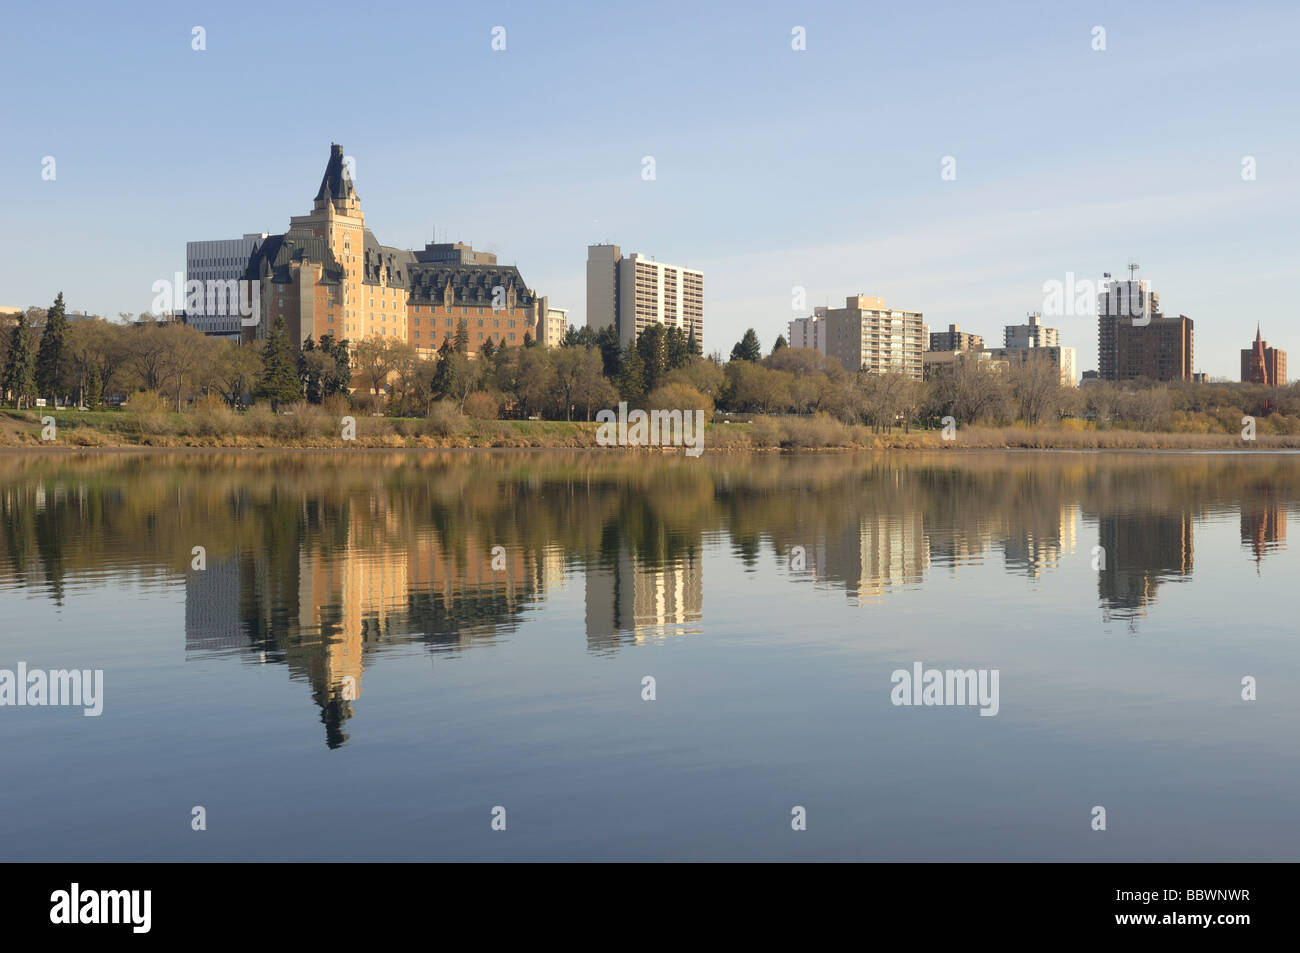 Saskatoon The Saskatoon skyline with the iconic Bessborough Hotel reflected in the South Saskatchewan River Stock Photo